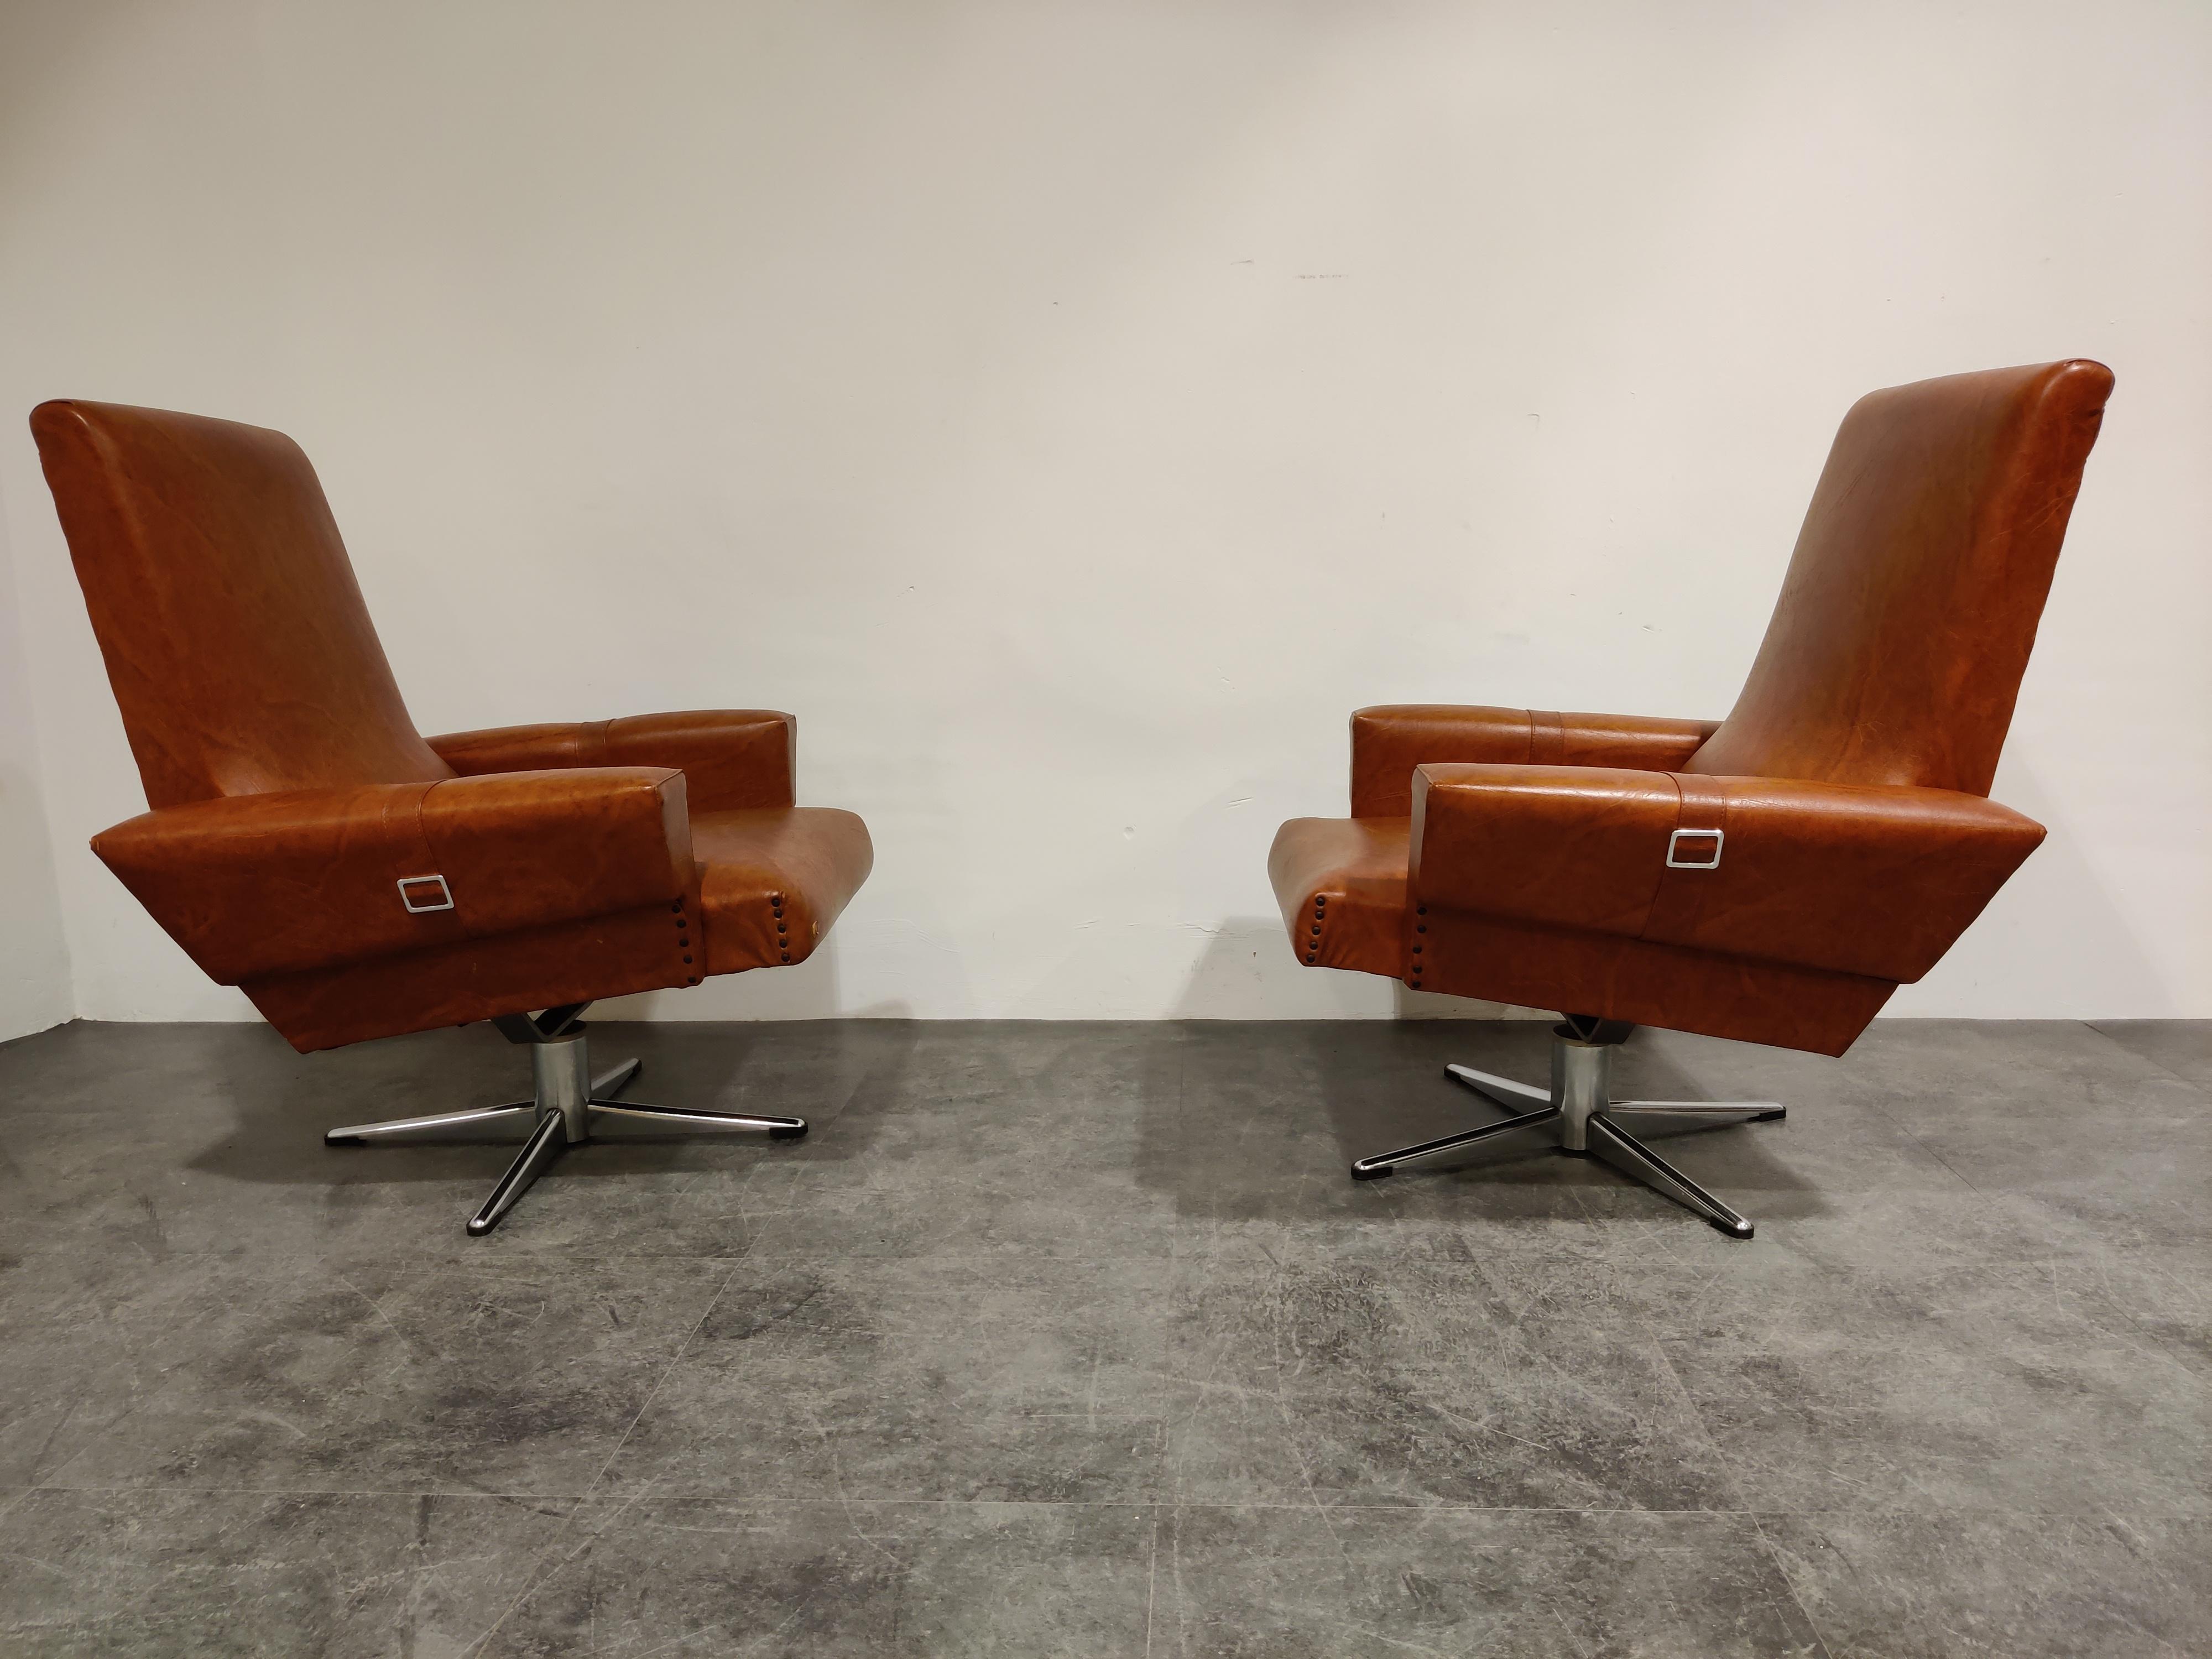 Belgian Pair of Vintage Skai and Chrome Swivel Chairs, 1960s, Belgium